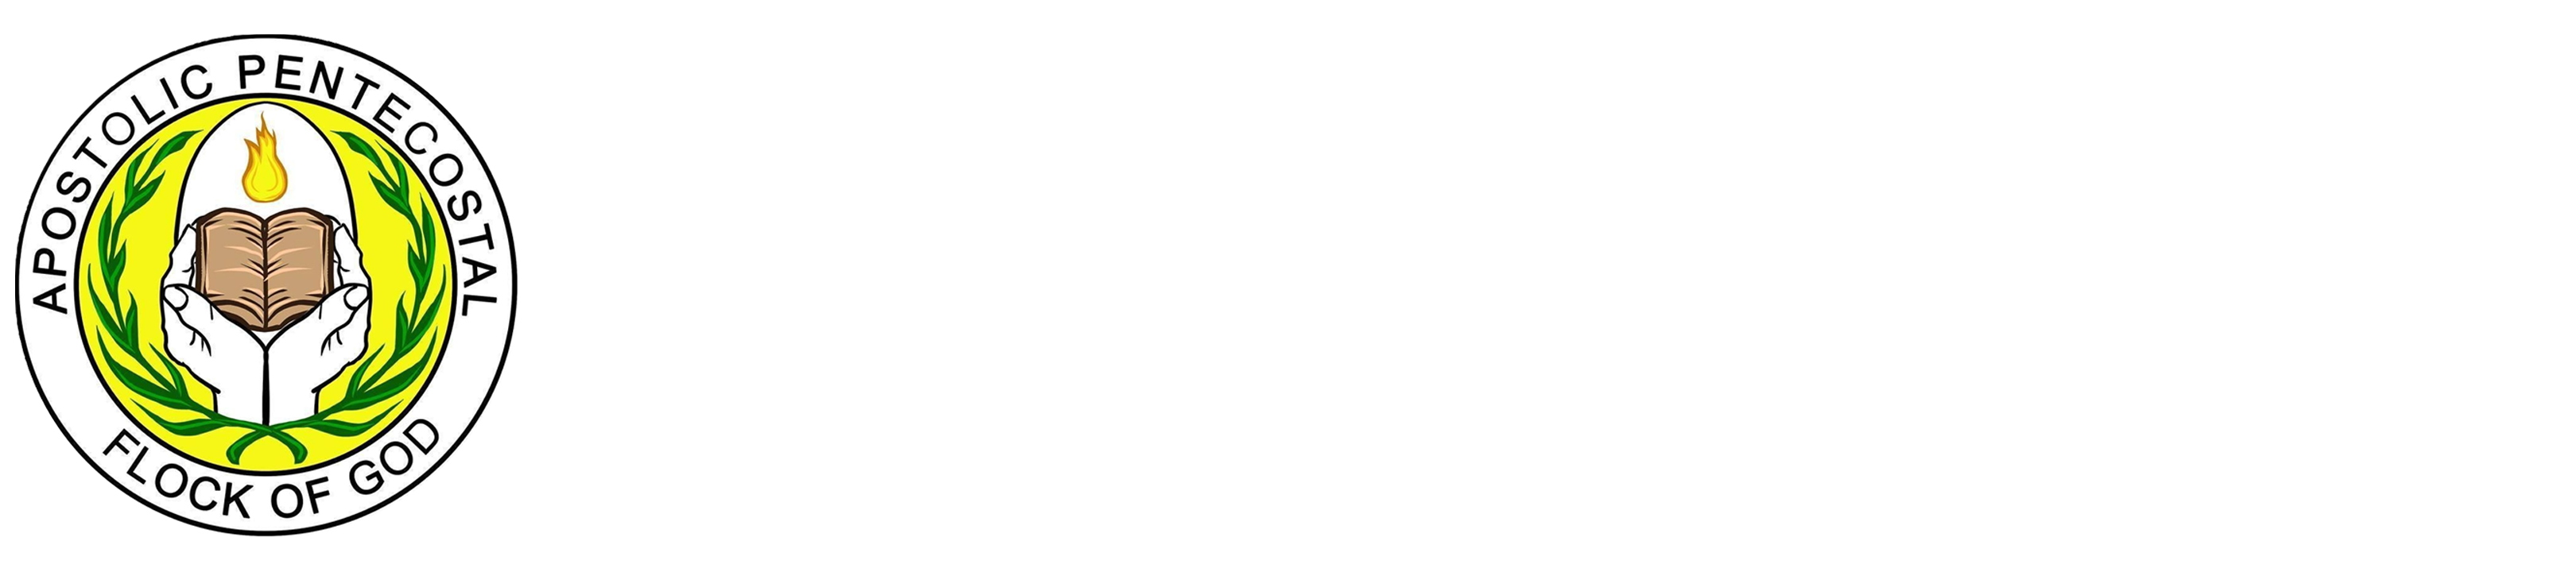 Apostolic Pentecostal Flock of God